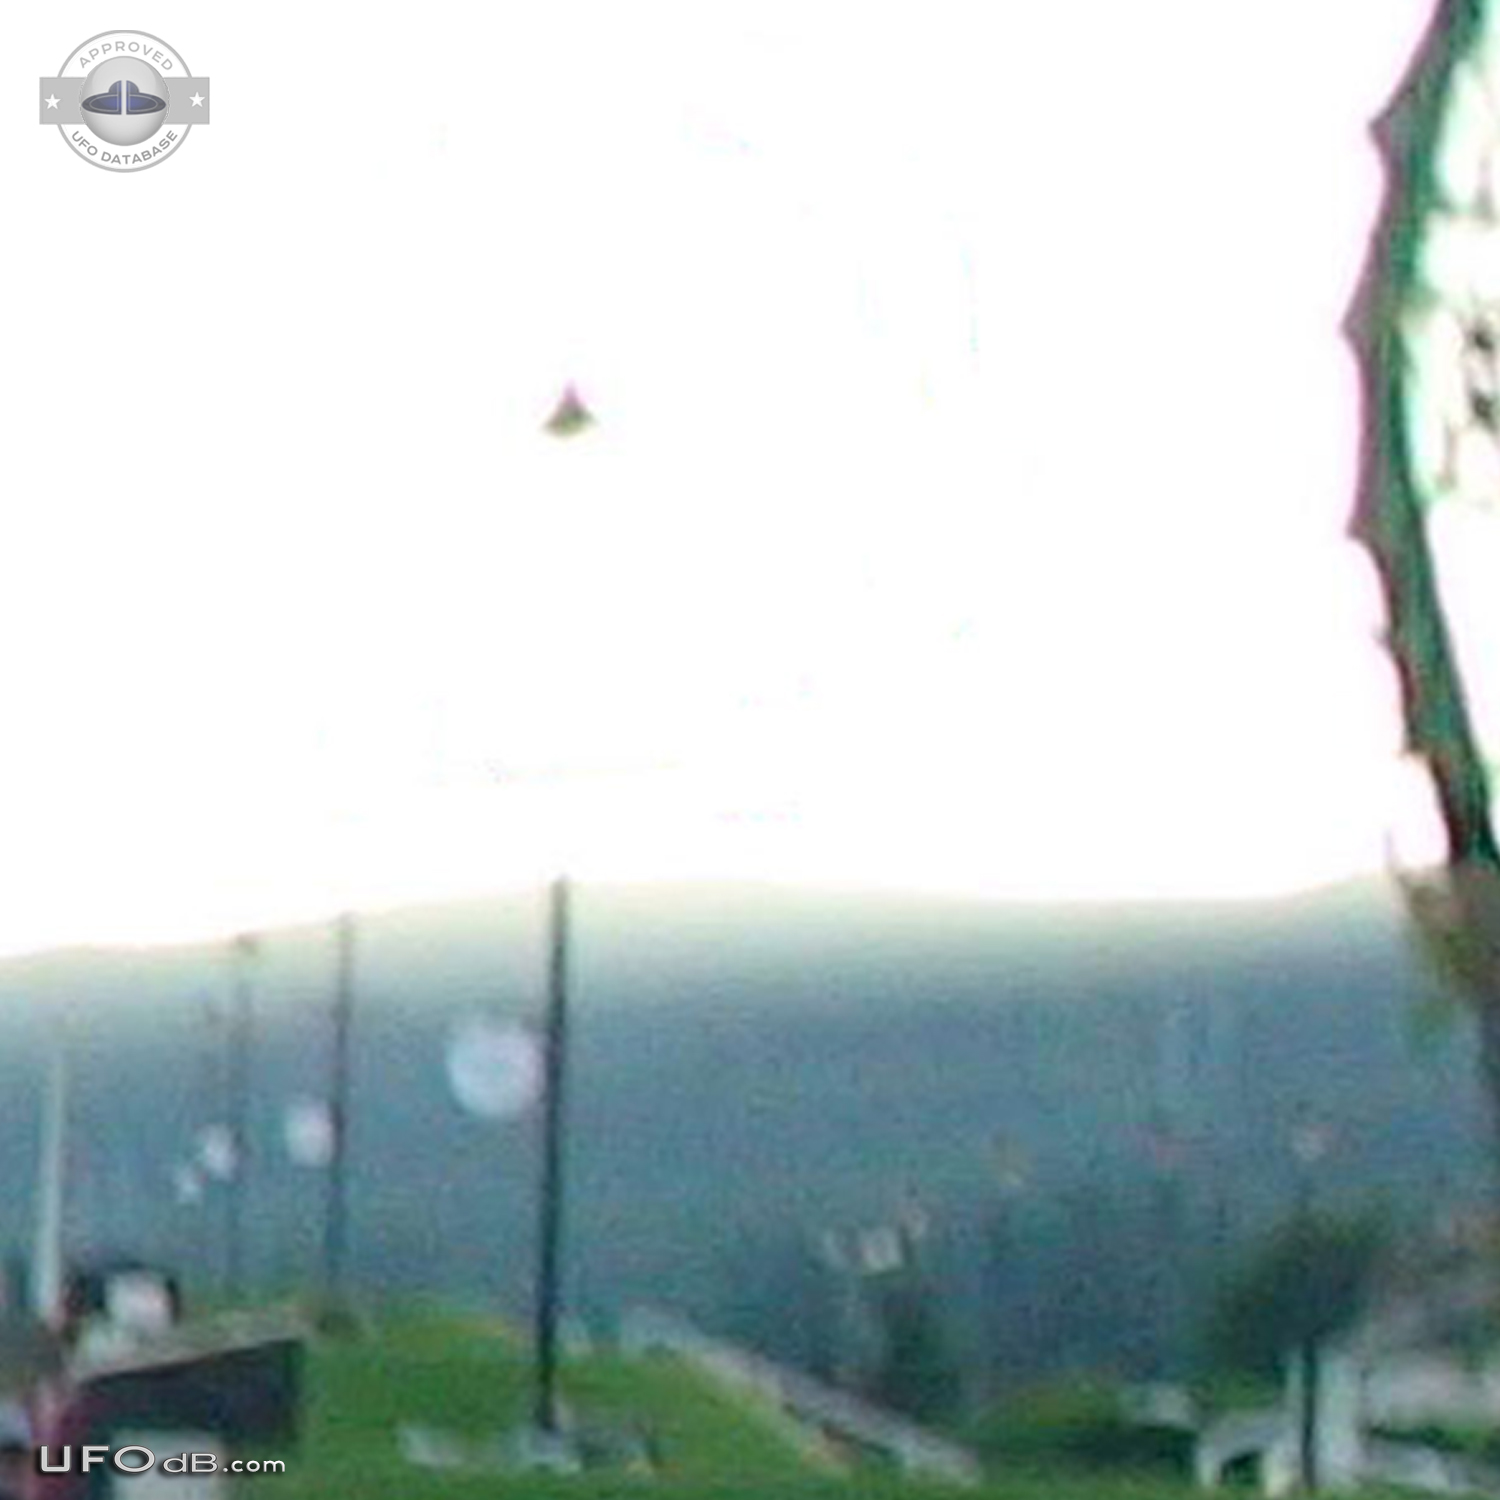 Triangular UFO caught on picture in Fort William, Scotland in 2010 UFO Picture #501-3